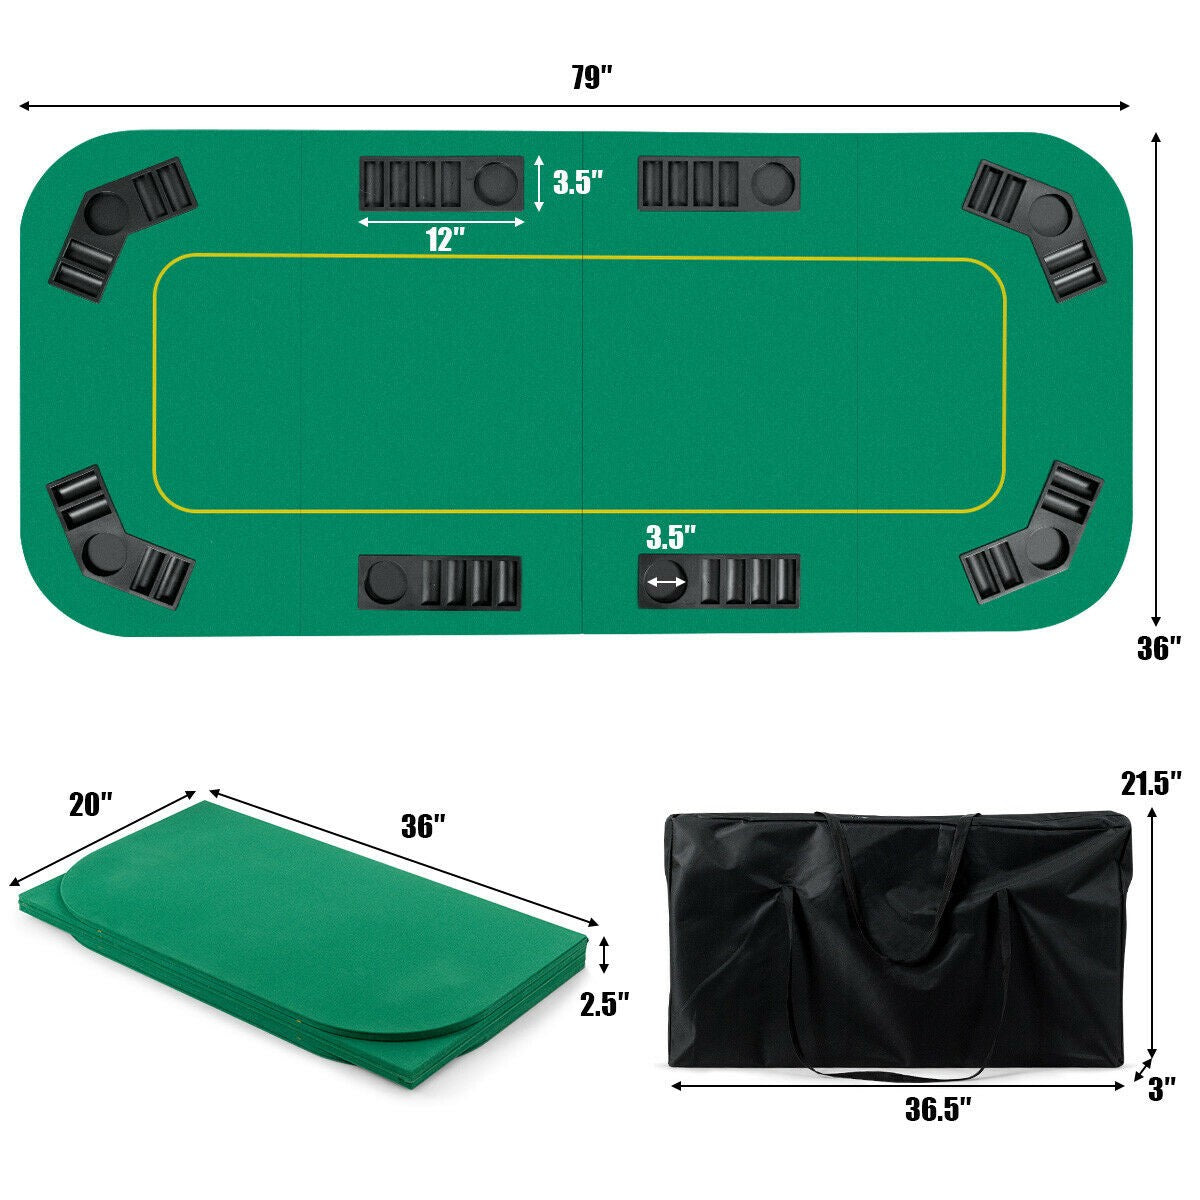 8 Player Poker Table Top, 80"x36" Folding Poker Table Top w/ Storage Bag (Green) - Giantexus